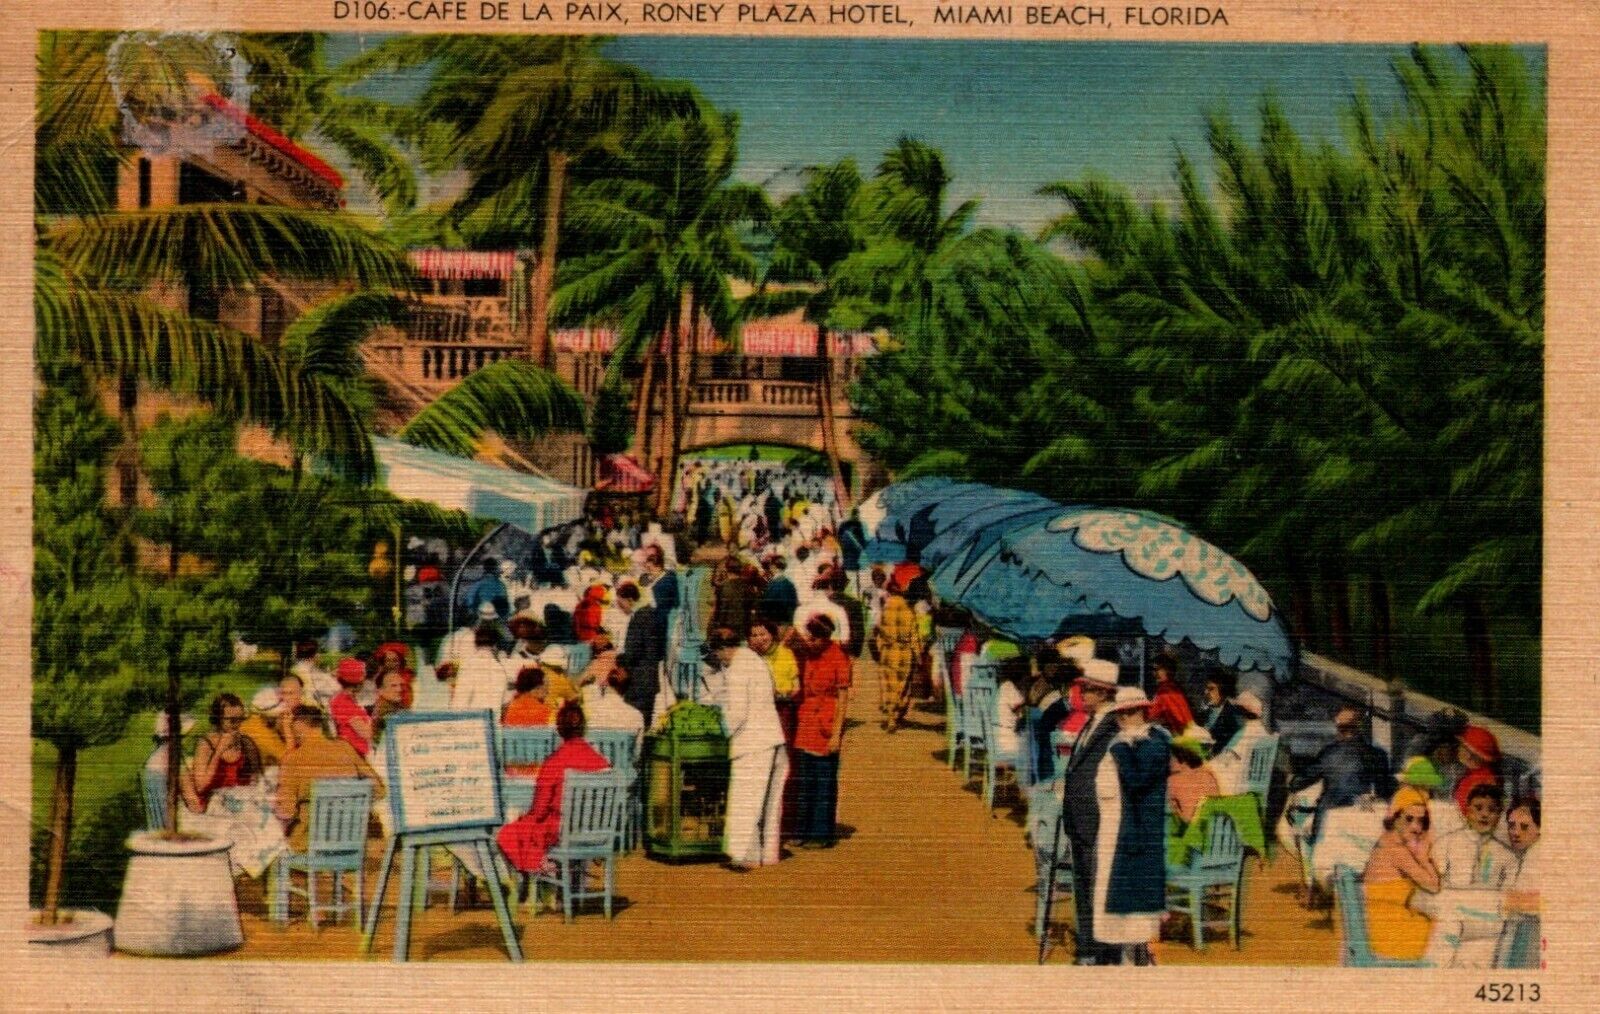 Miami Beach Cafe De La Pix Rodney Plaza Hotel Vintage Linen Postcard Posted 1941